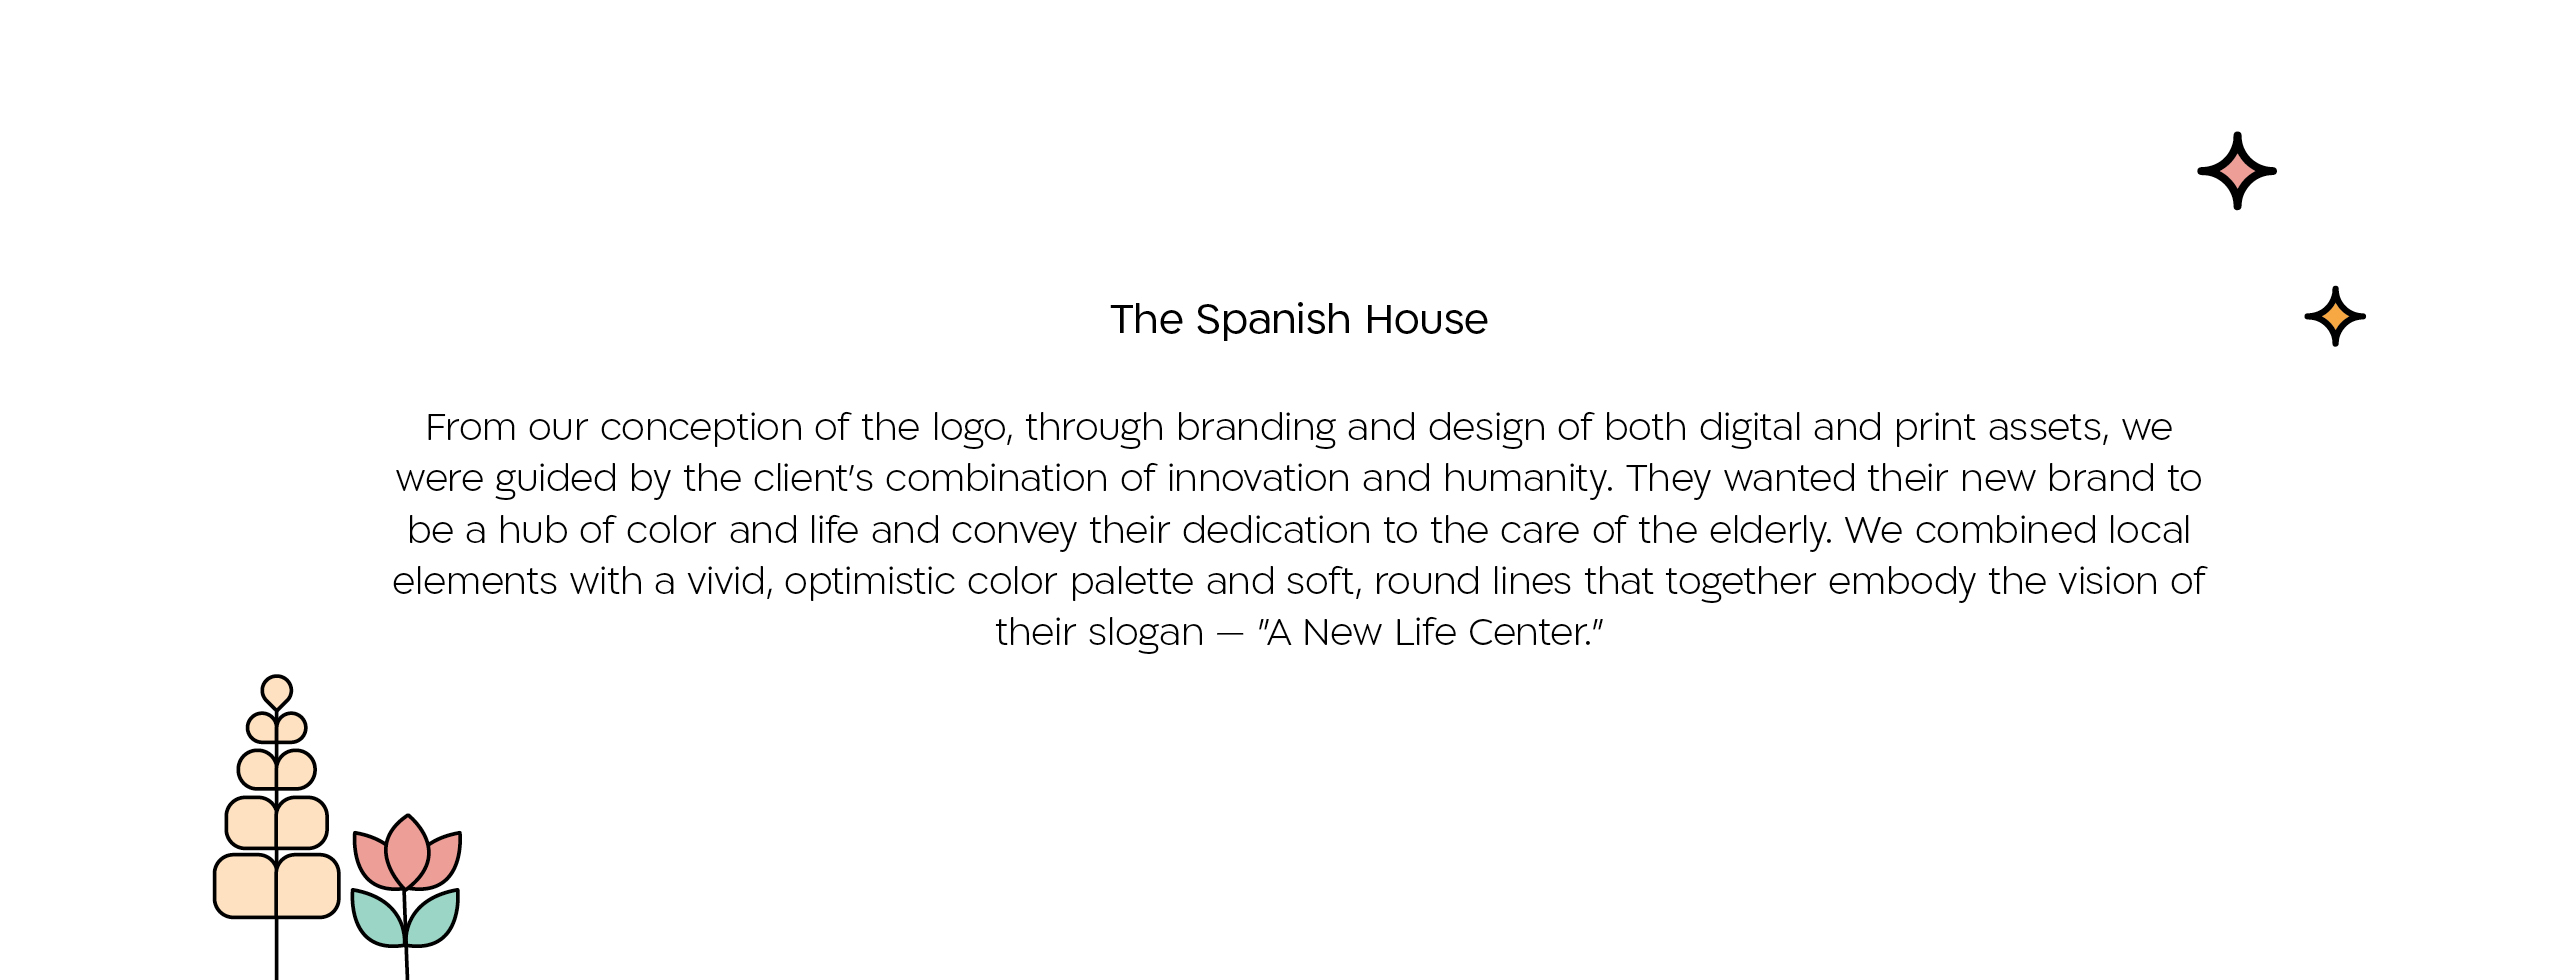 The Spanish House by Dotan-Lidgi